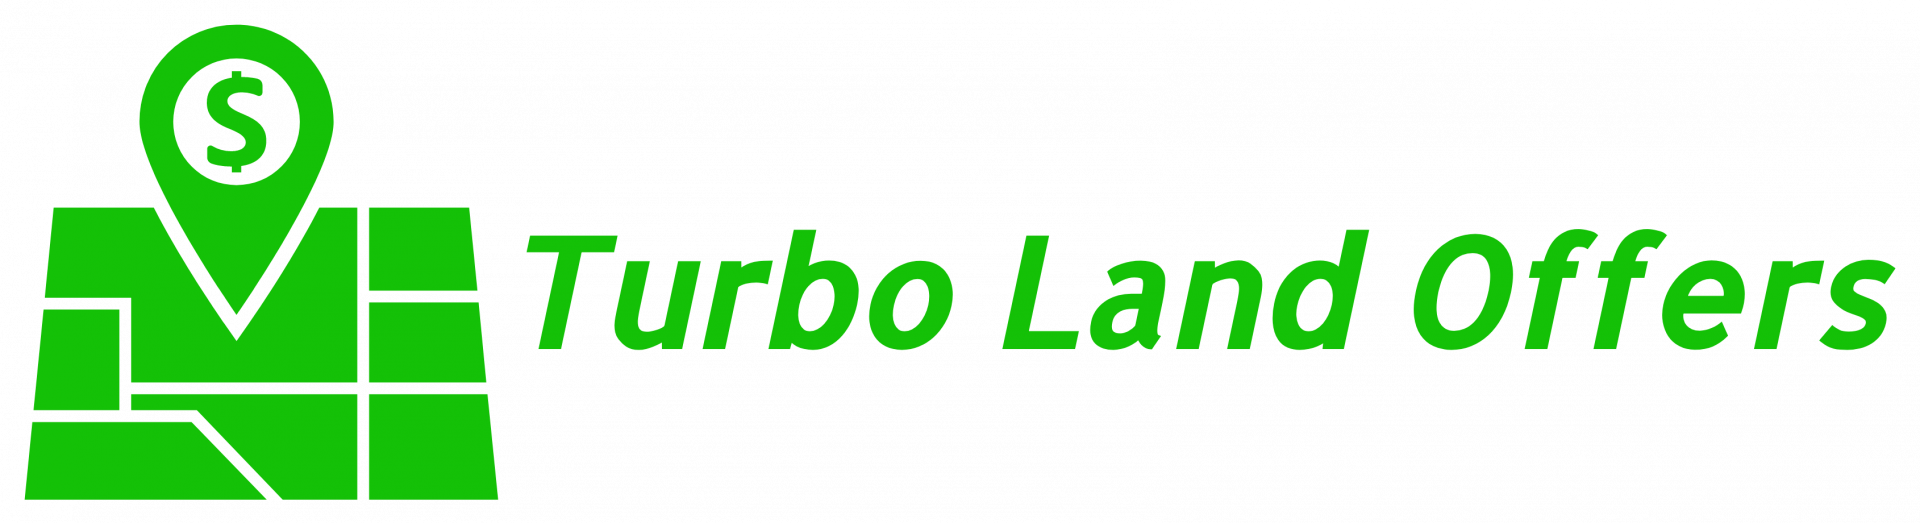 Turbo Land Offers logo